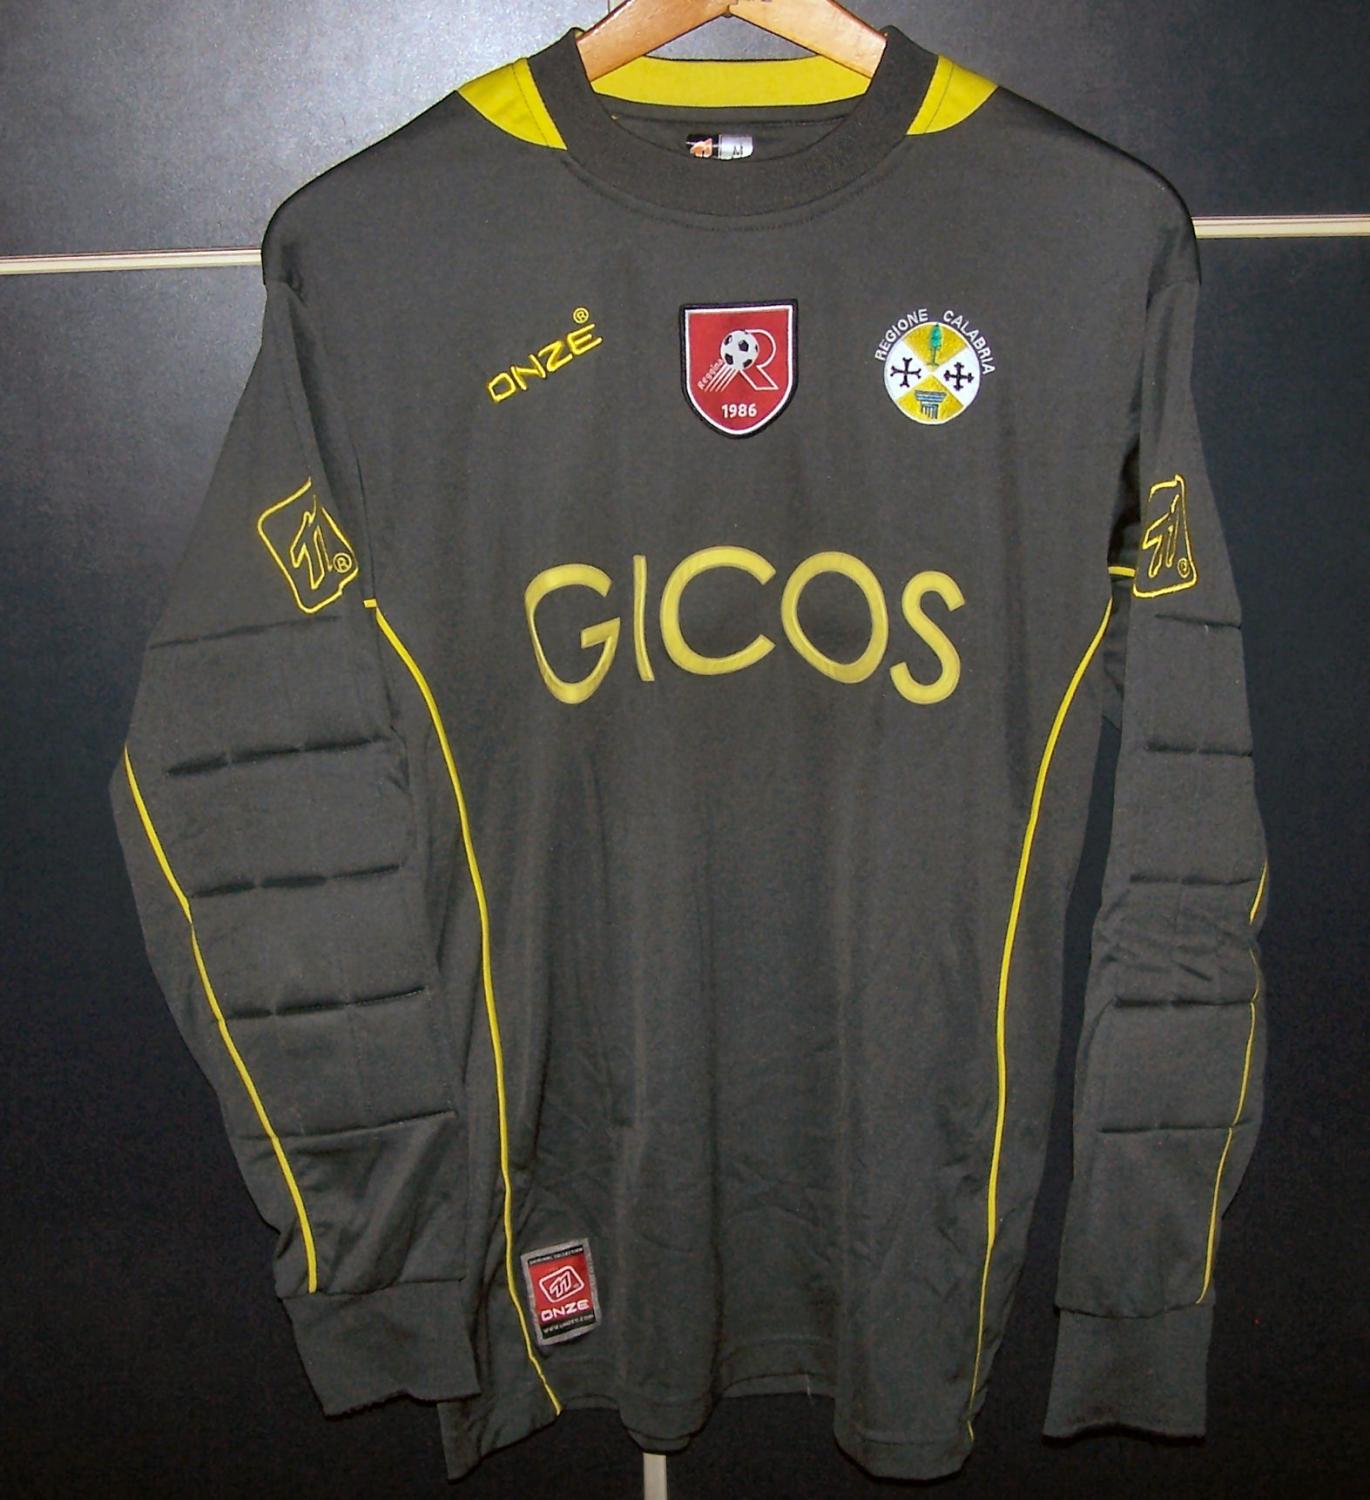 maillot de foot urbs reggina gardien 2009-2010 rétro